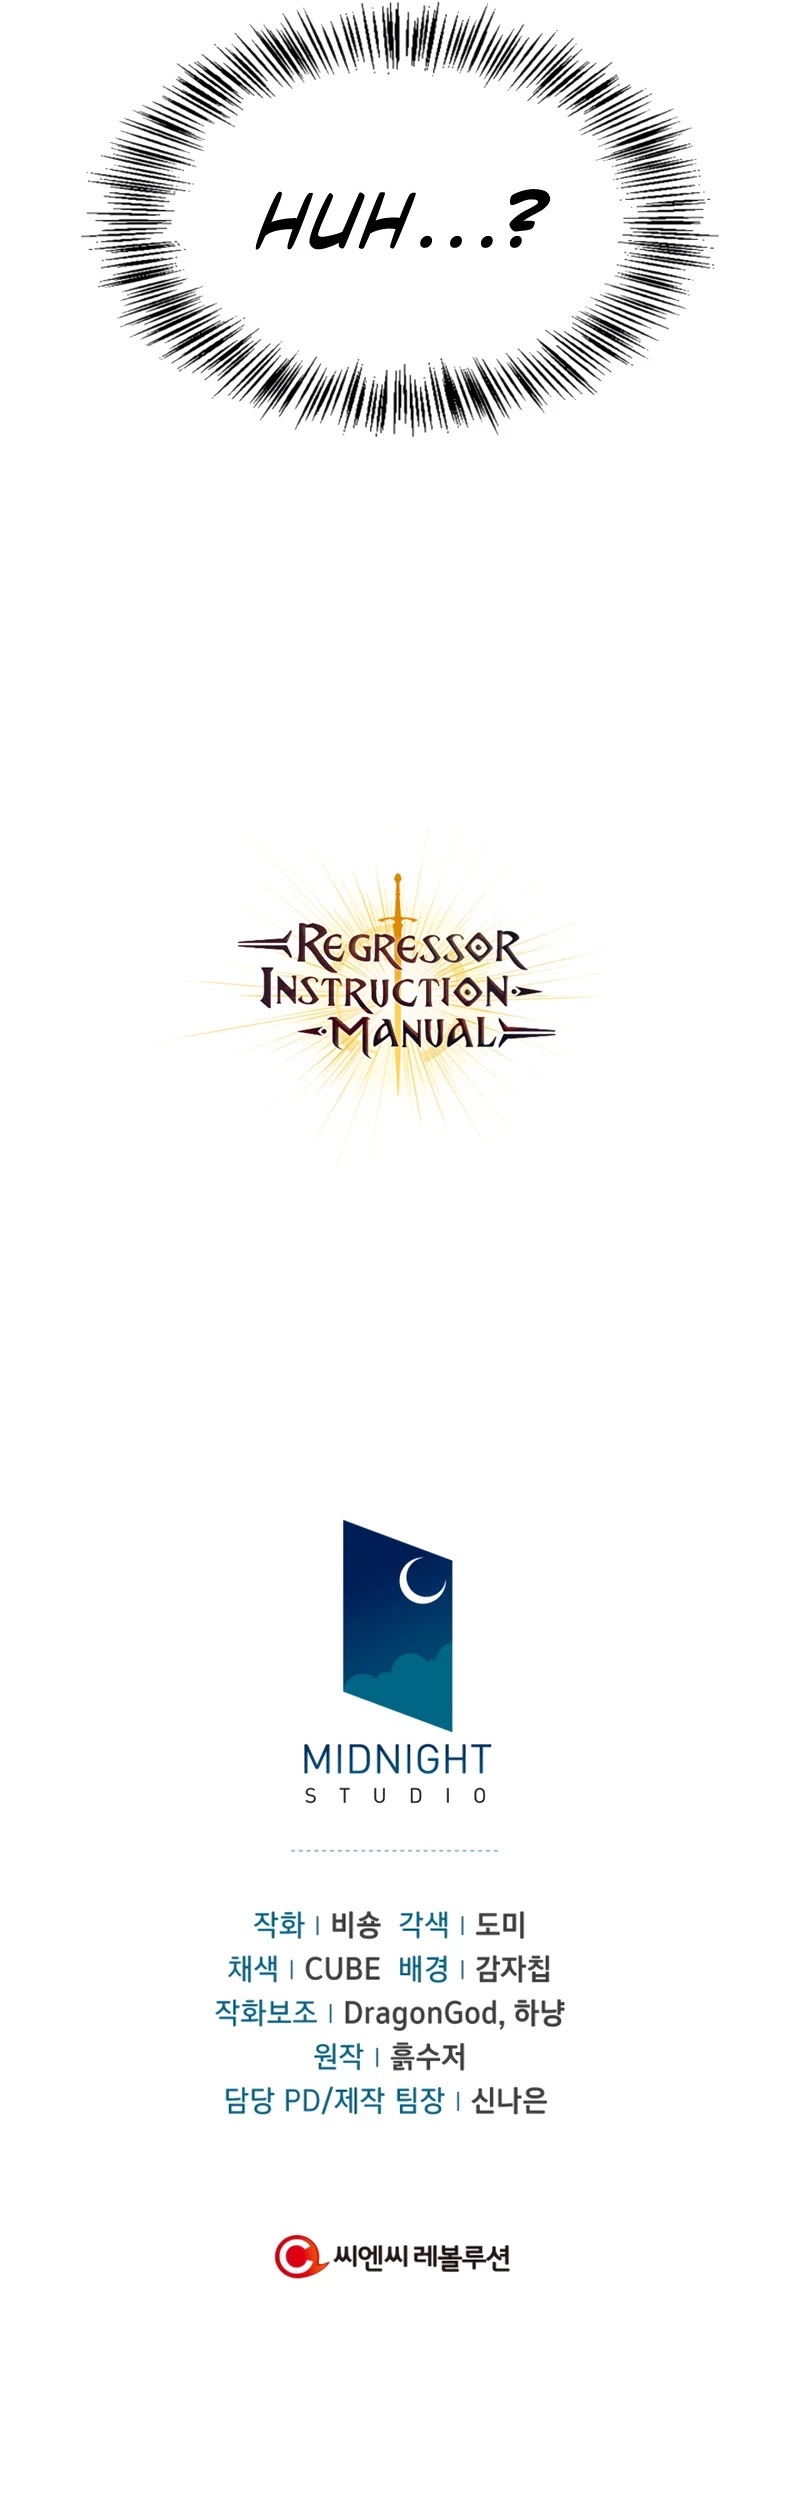 Regressor Instruction Manual, Chapter 37 image 71